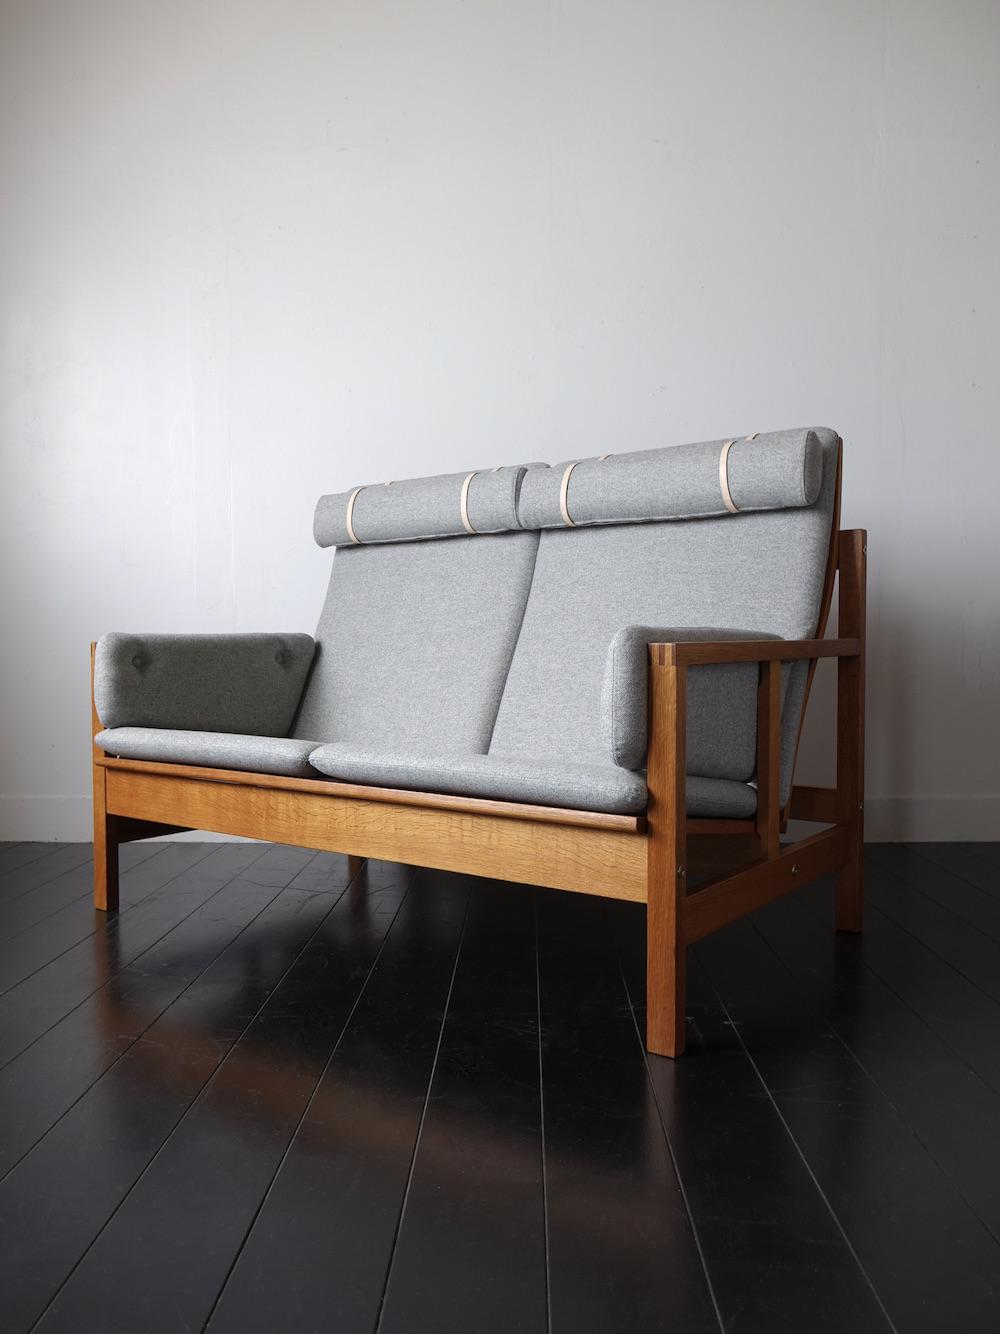 Sofa “model 2252” by Borge Mogensen for Fredericia